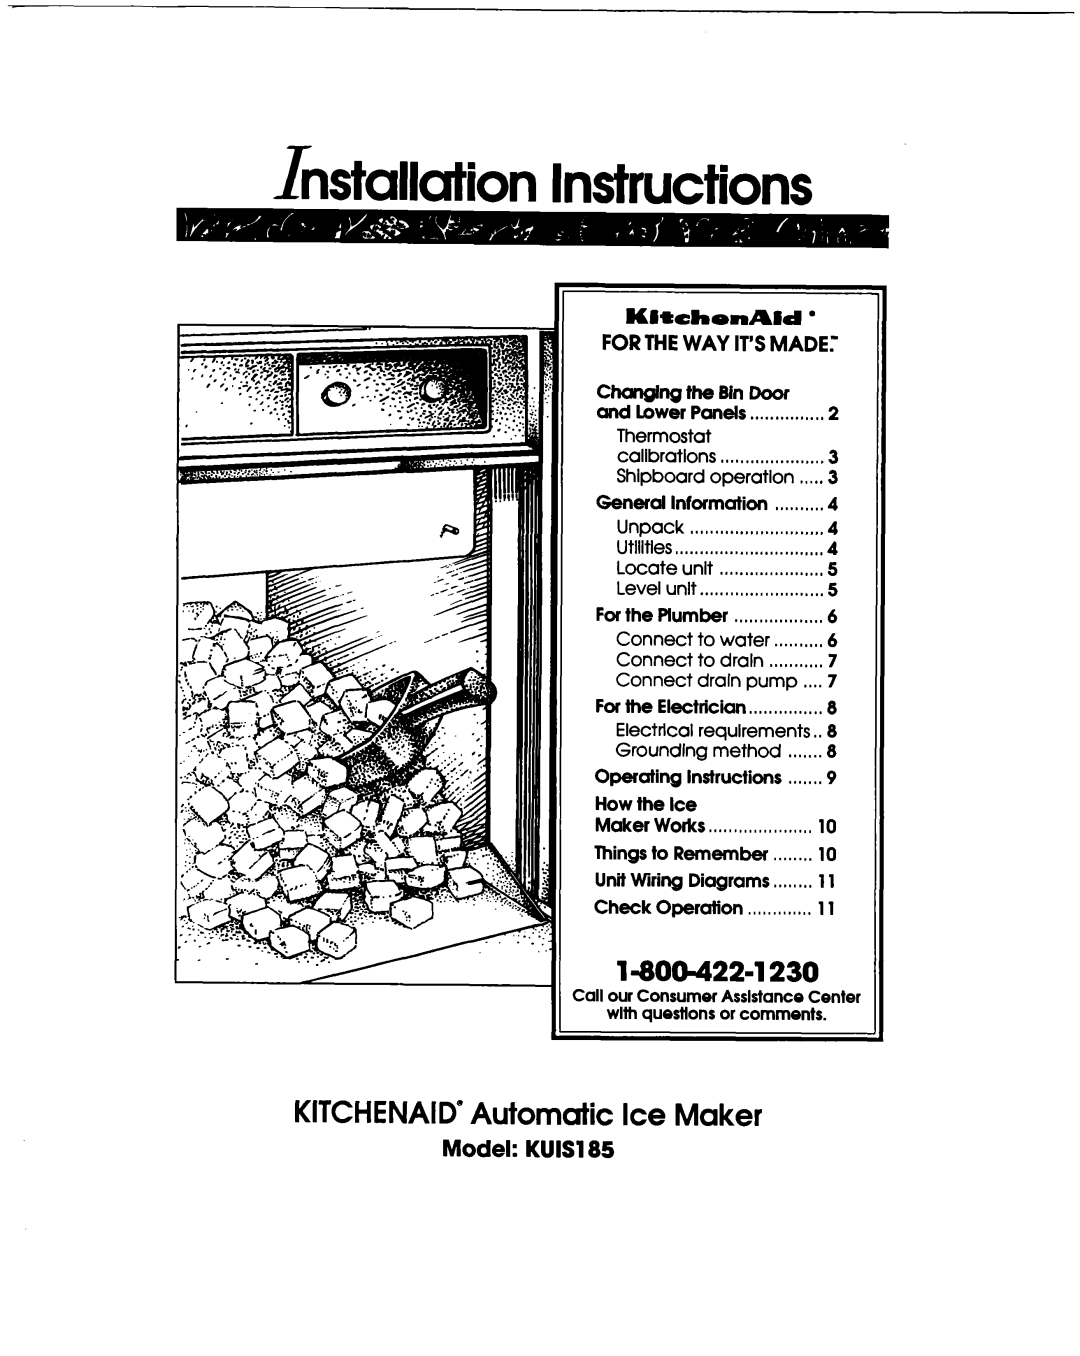 KitchenAid KULSL85 installation instructions Model KUlSl85, Kl+chenAtd l, and lower Panels, General Information, Iiiiiiii 